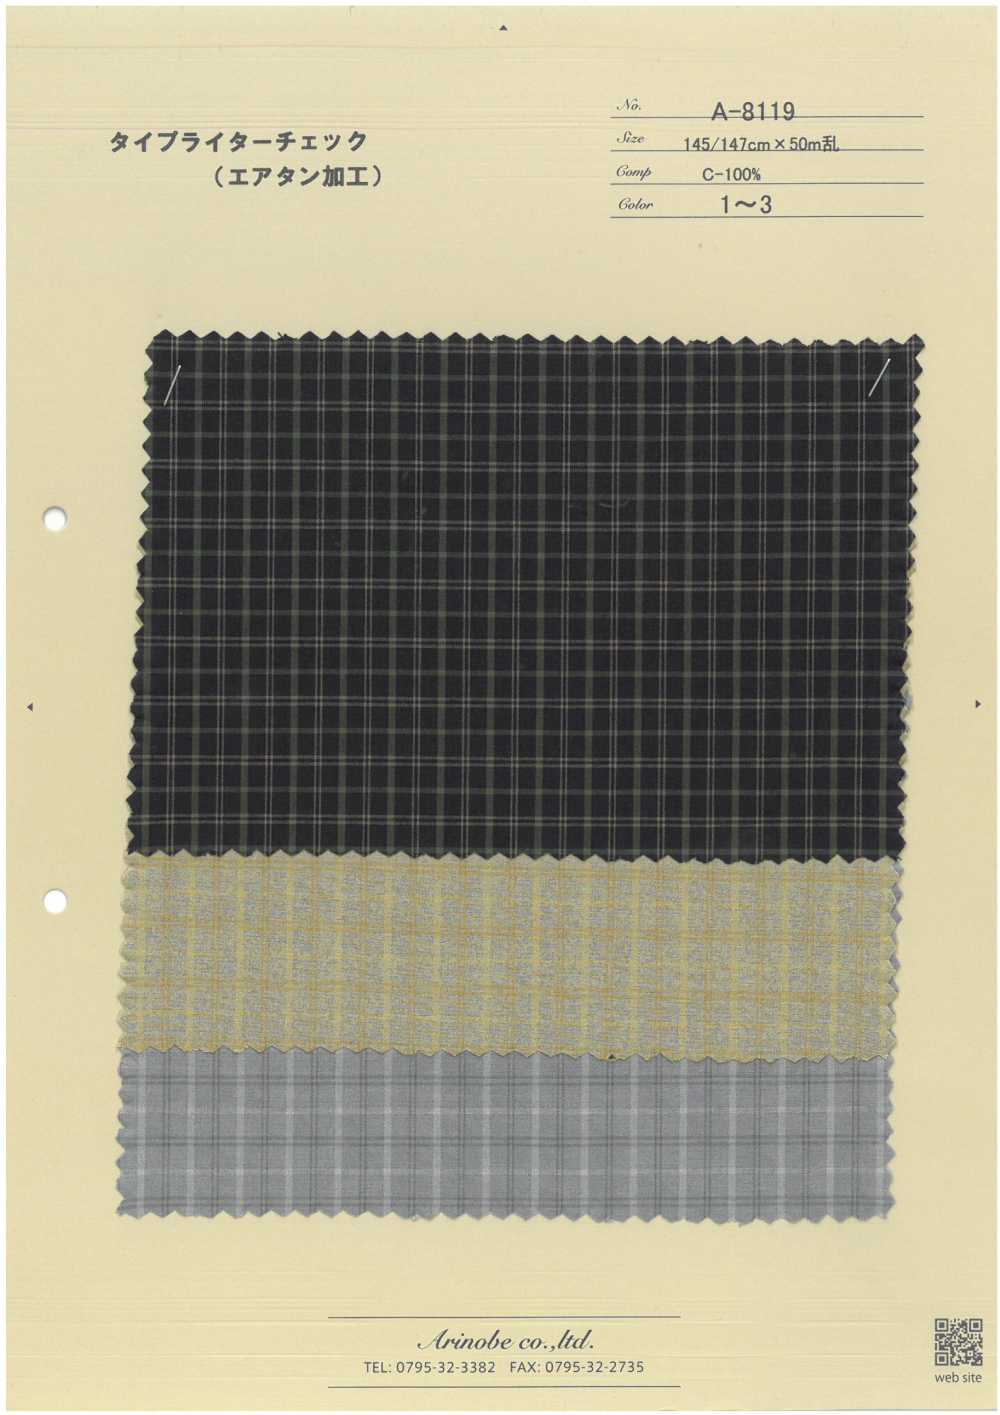 A-8119 Paño Para Máquina De Escribir (Procesamiento De Bronceado Con Aire)[Fabrica Textil] ARINOBE CO., LTD.